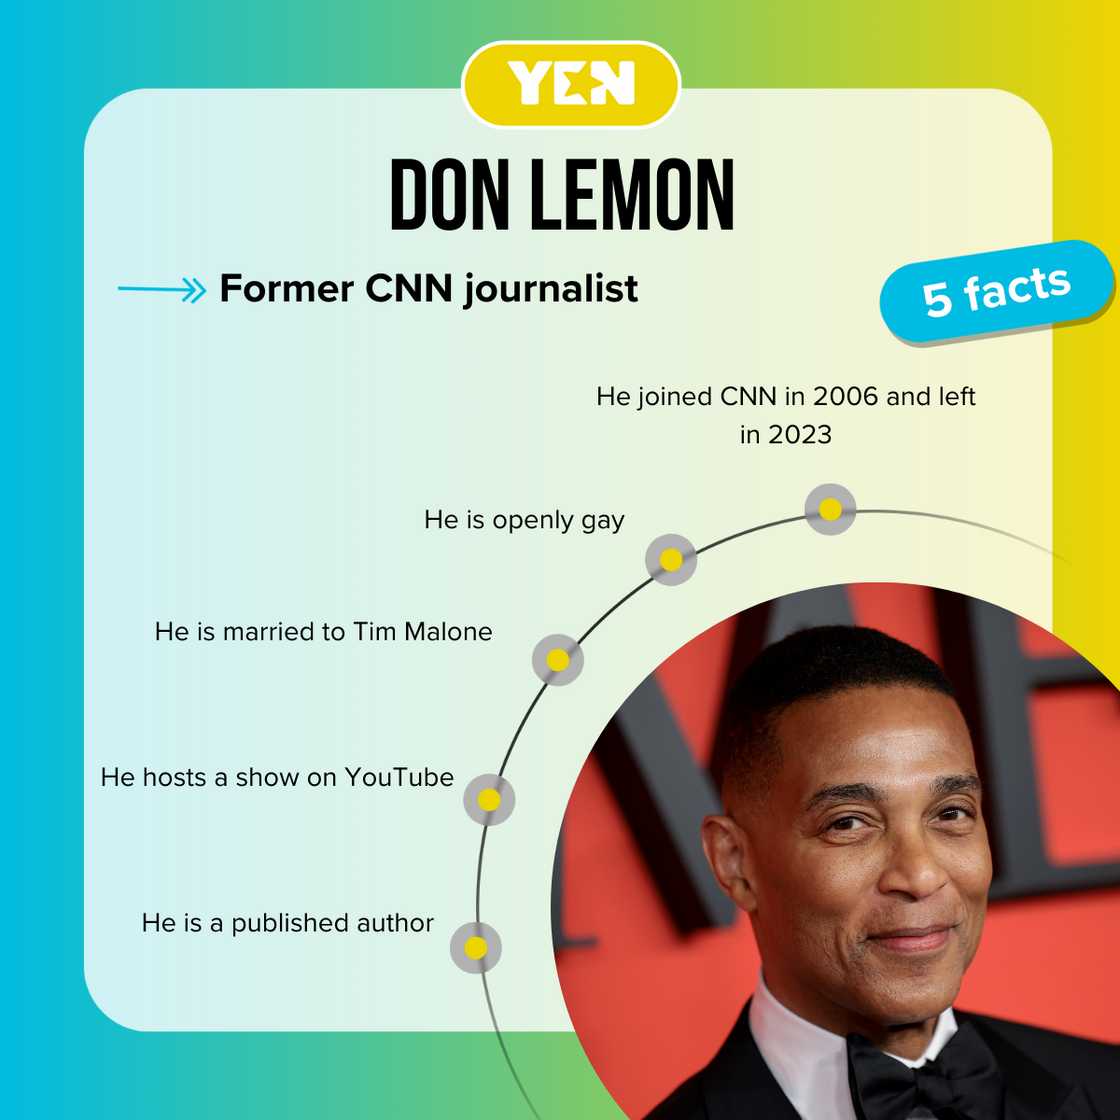 Top-5 facts about Don Lemon